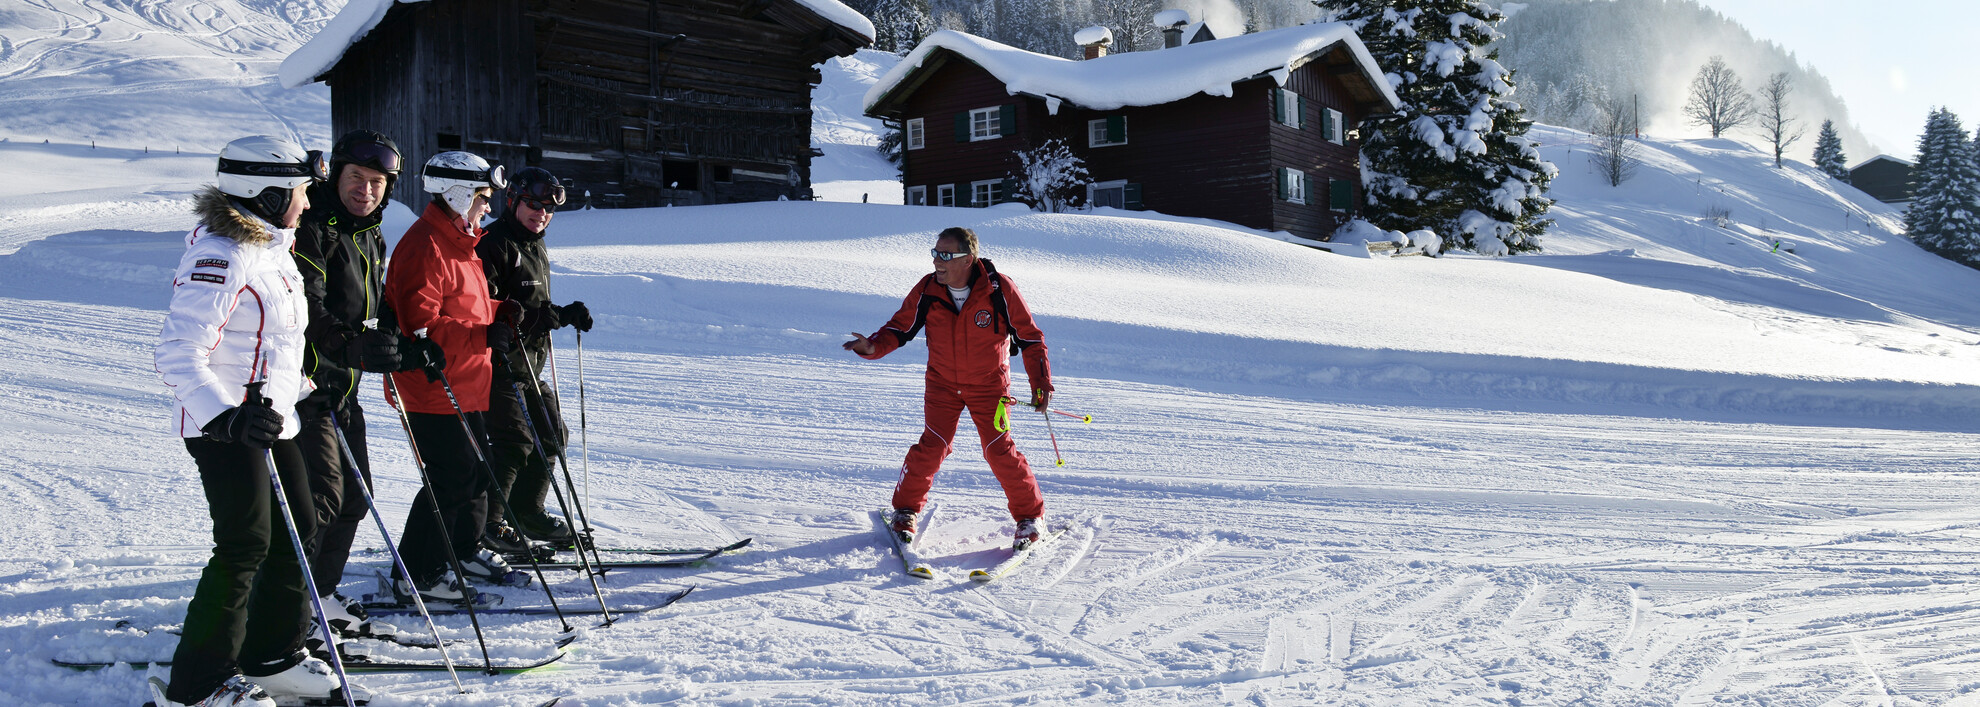 Ski course with Andy Herr | © Kleinwalsertal Tourismus eGen | Photographer: Andy Herr